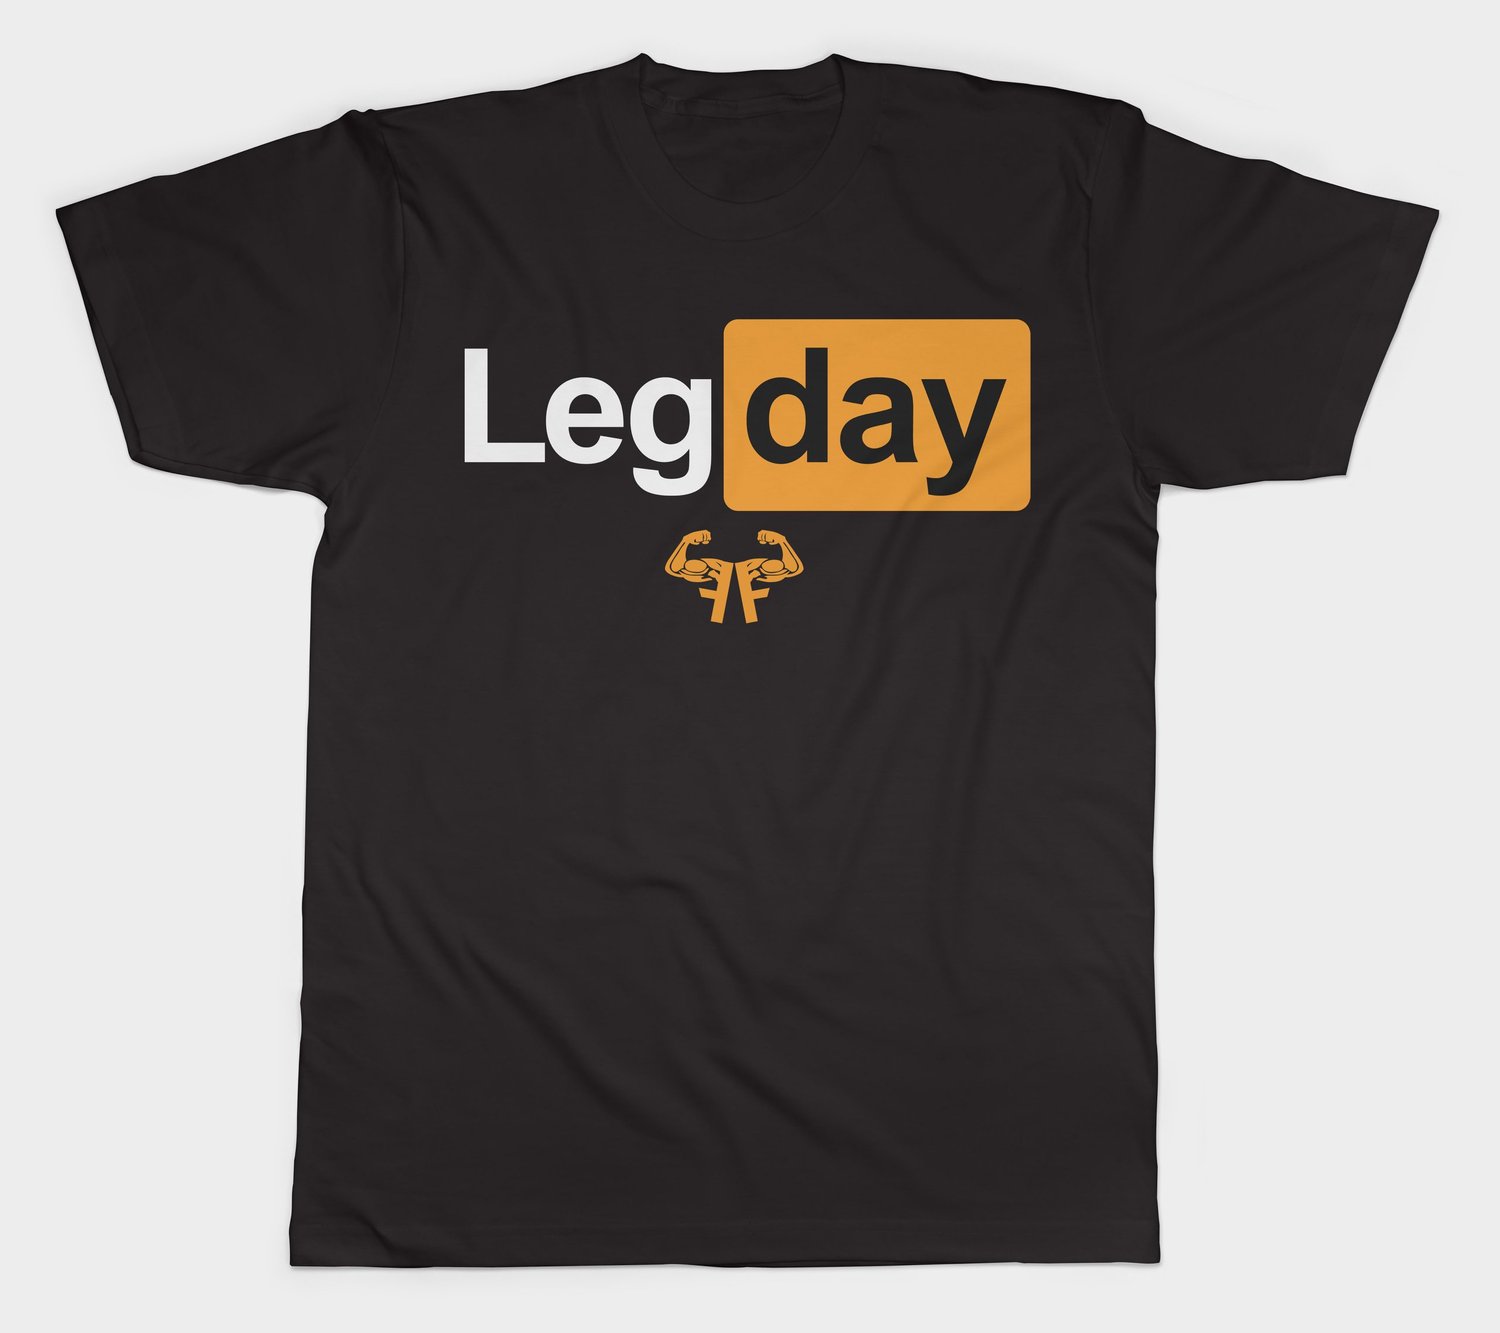 LEG DAY 